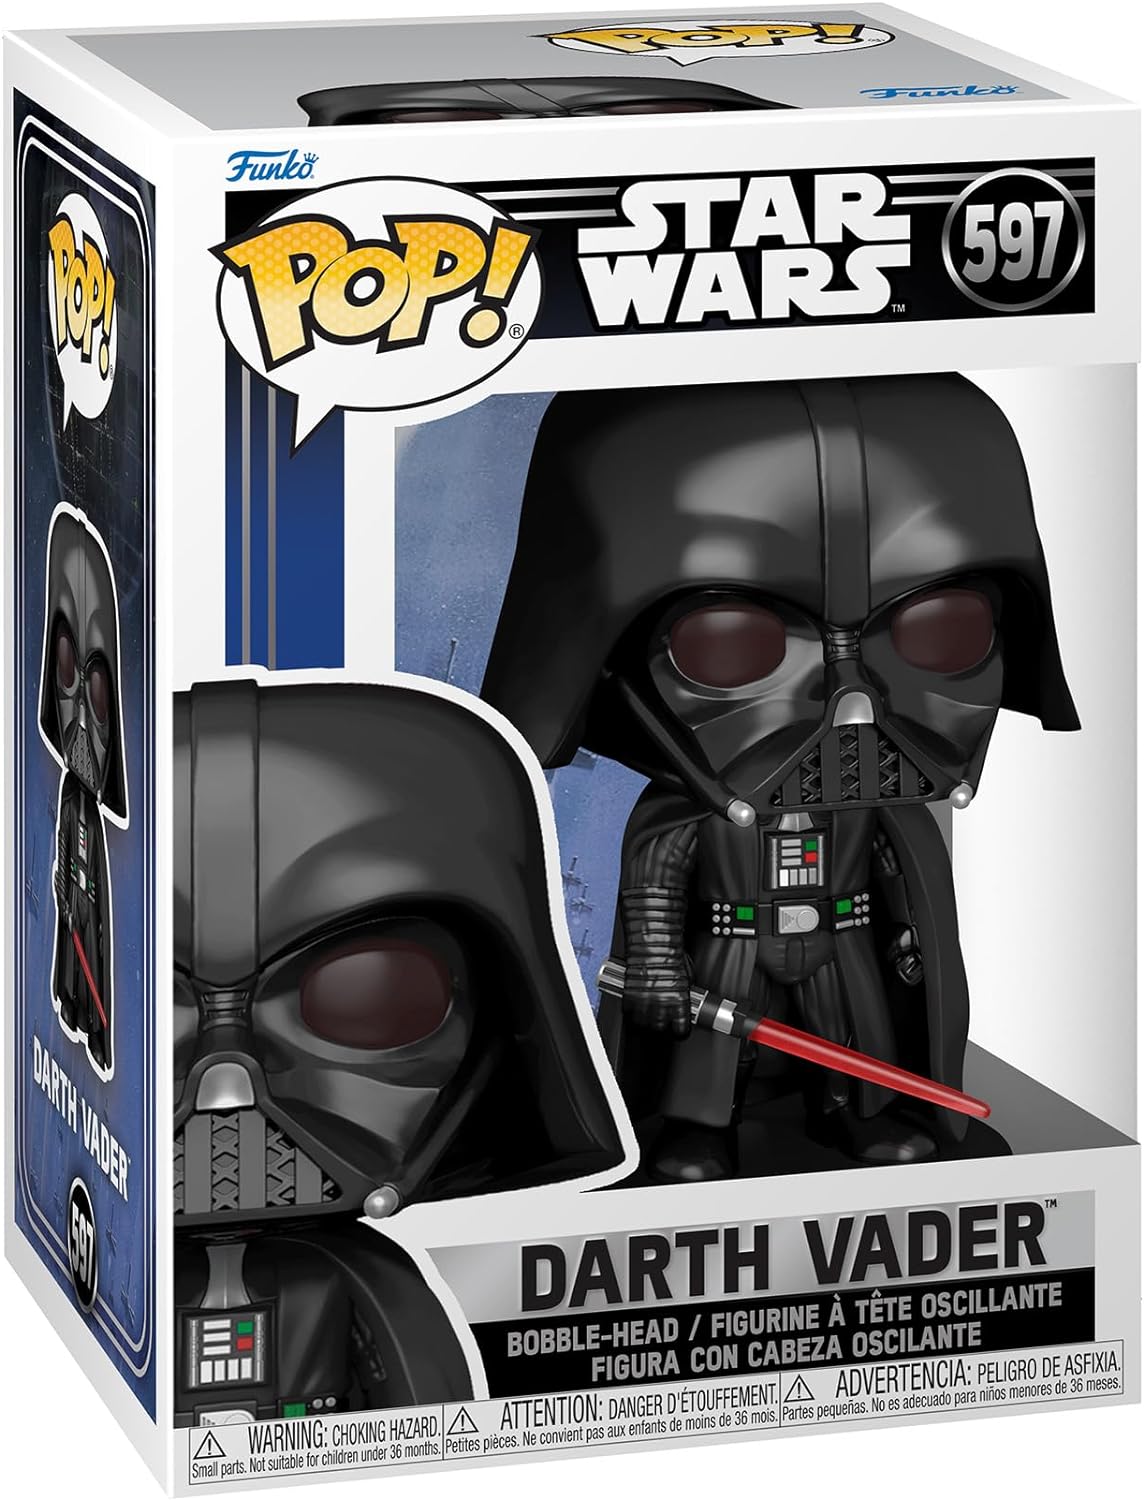 Funko Pop! Star Wars: Darth Vader #597